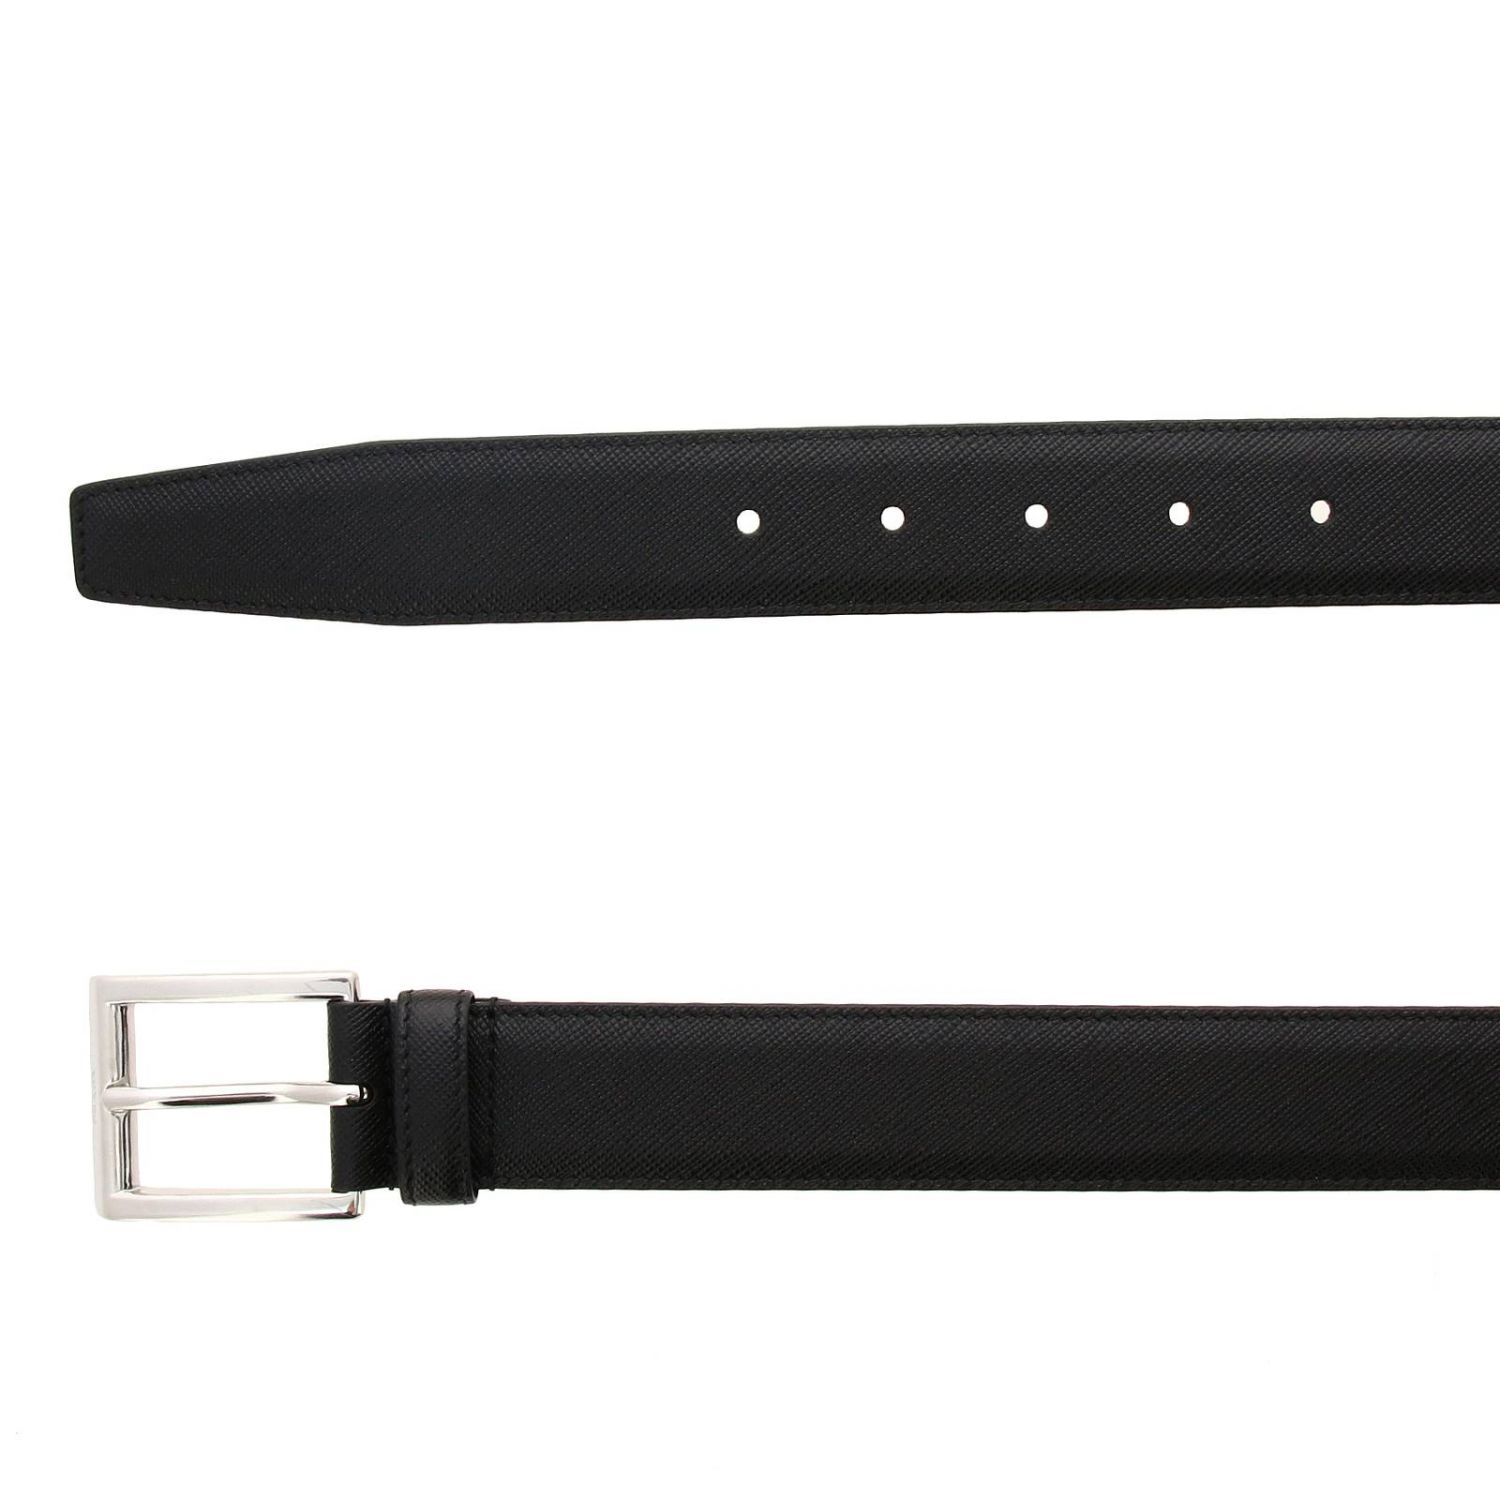 PRADA: belt in saffiano leather with metal buckle - Black | Belt Prada ...